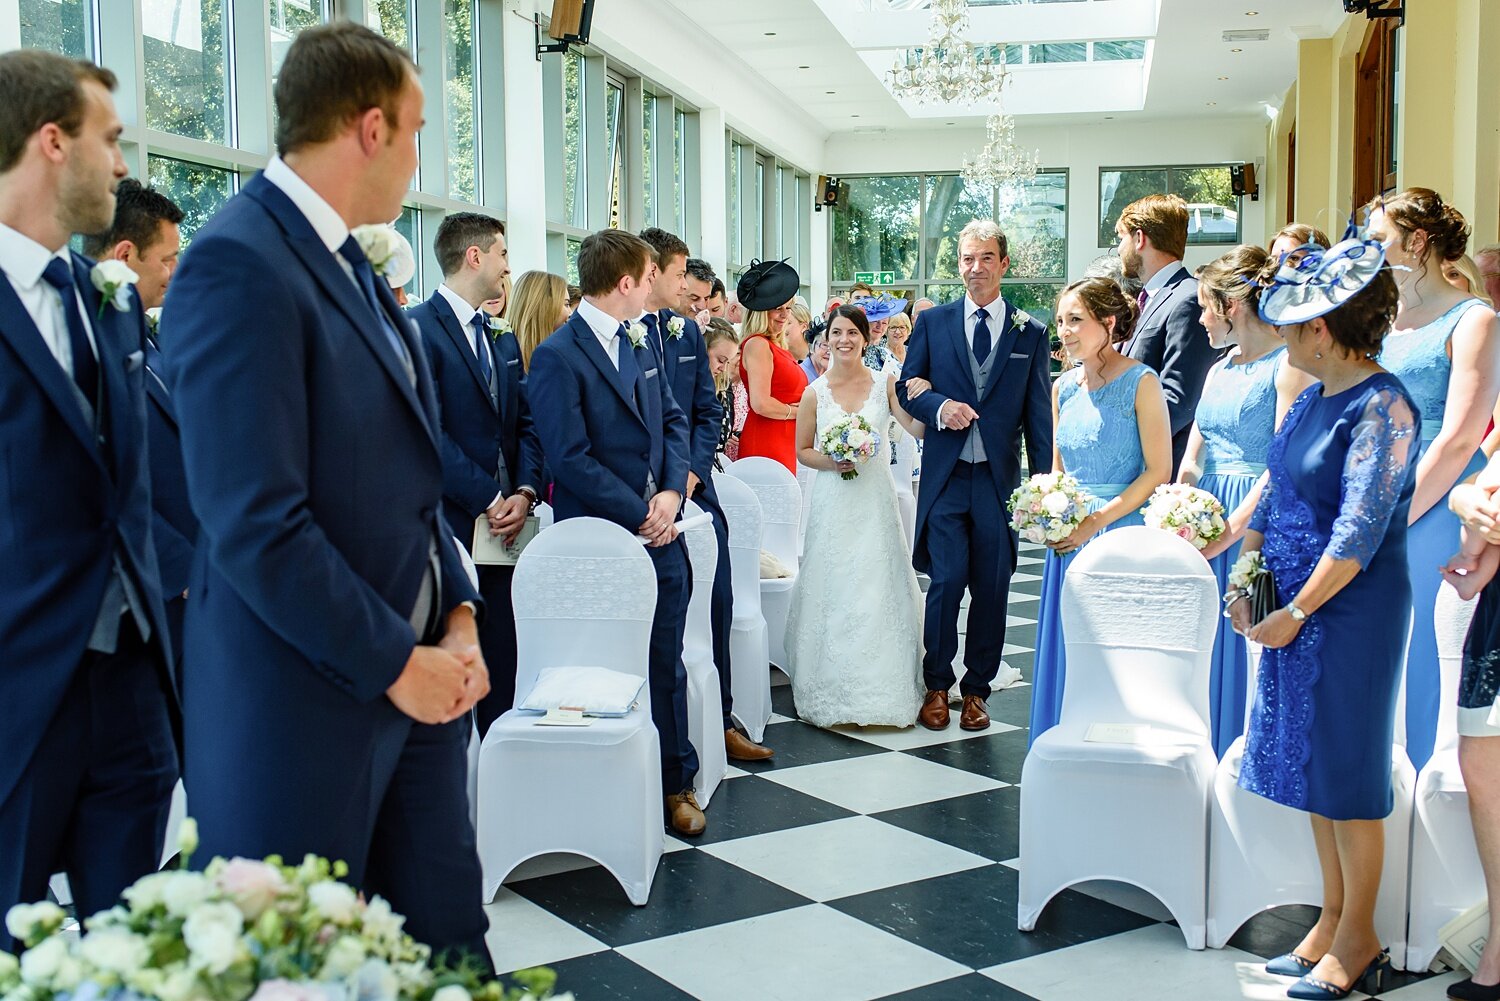 Wedding ceremony photos at Rhosygilwen Mansion